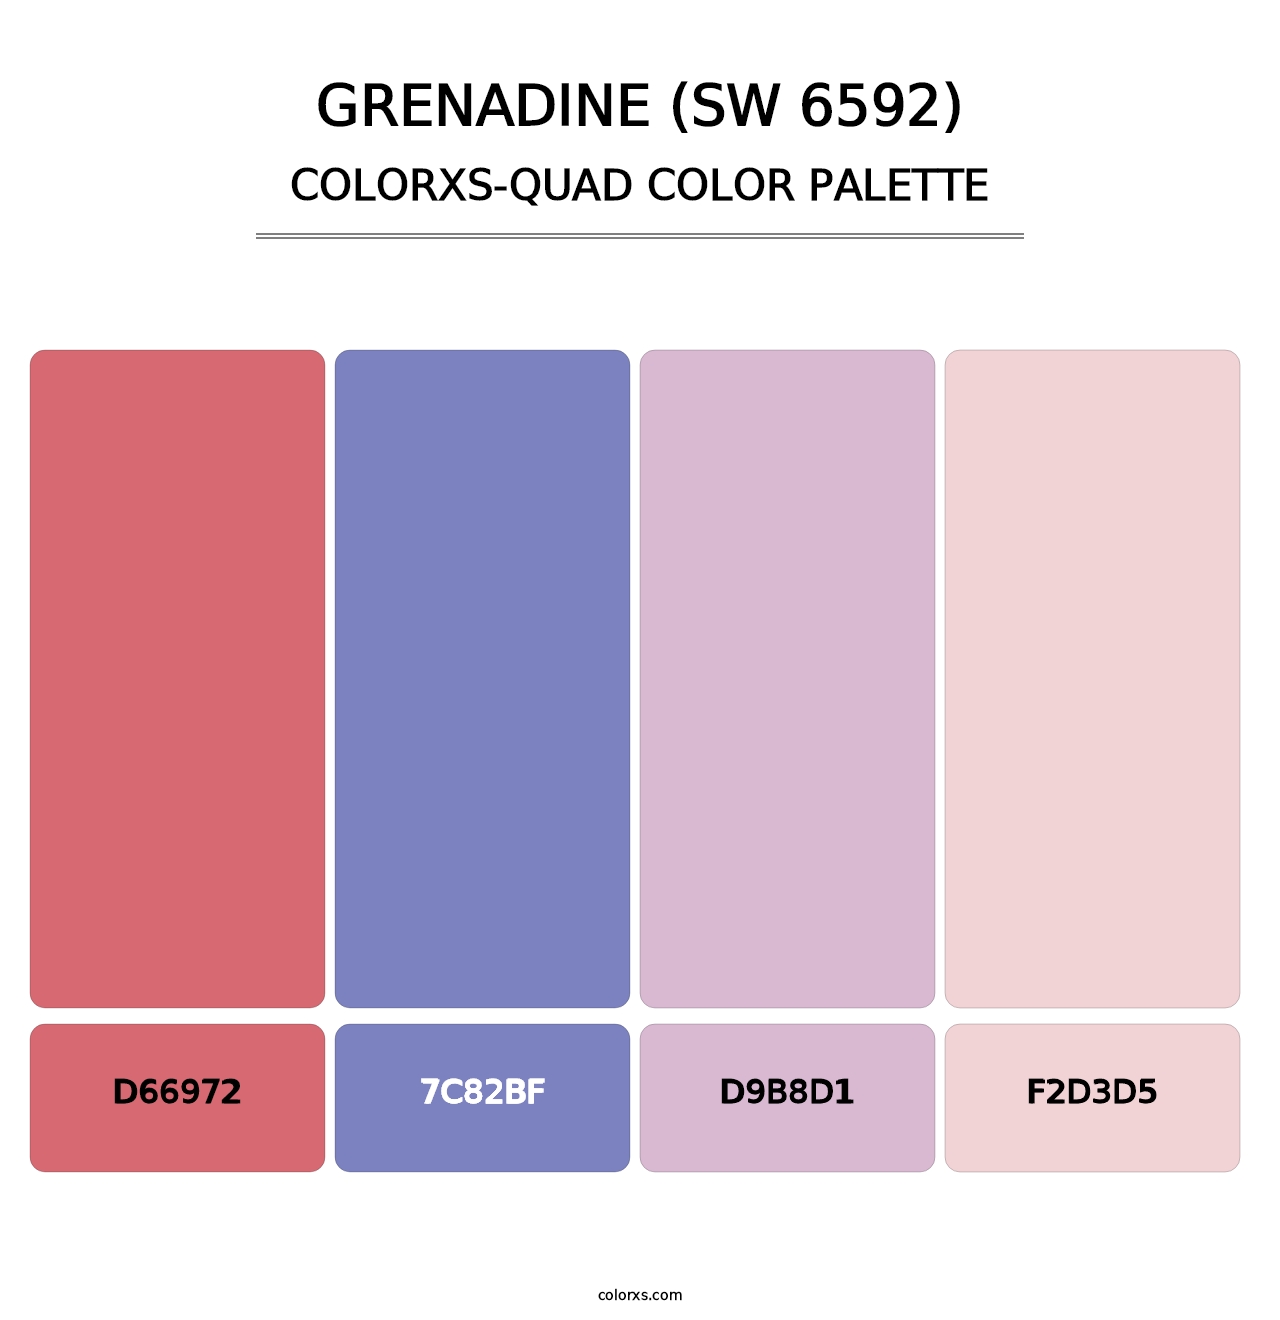 Grenadine (SW 6592) - Colorxs Quad Palette